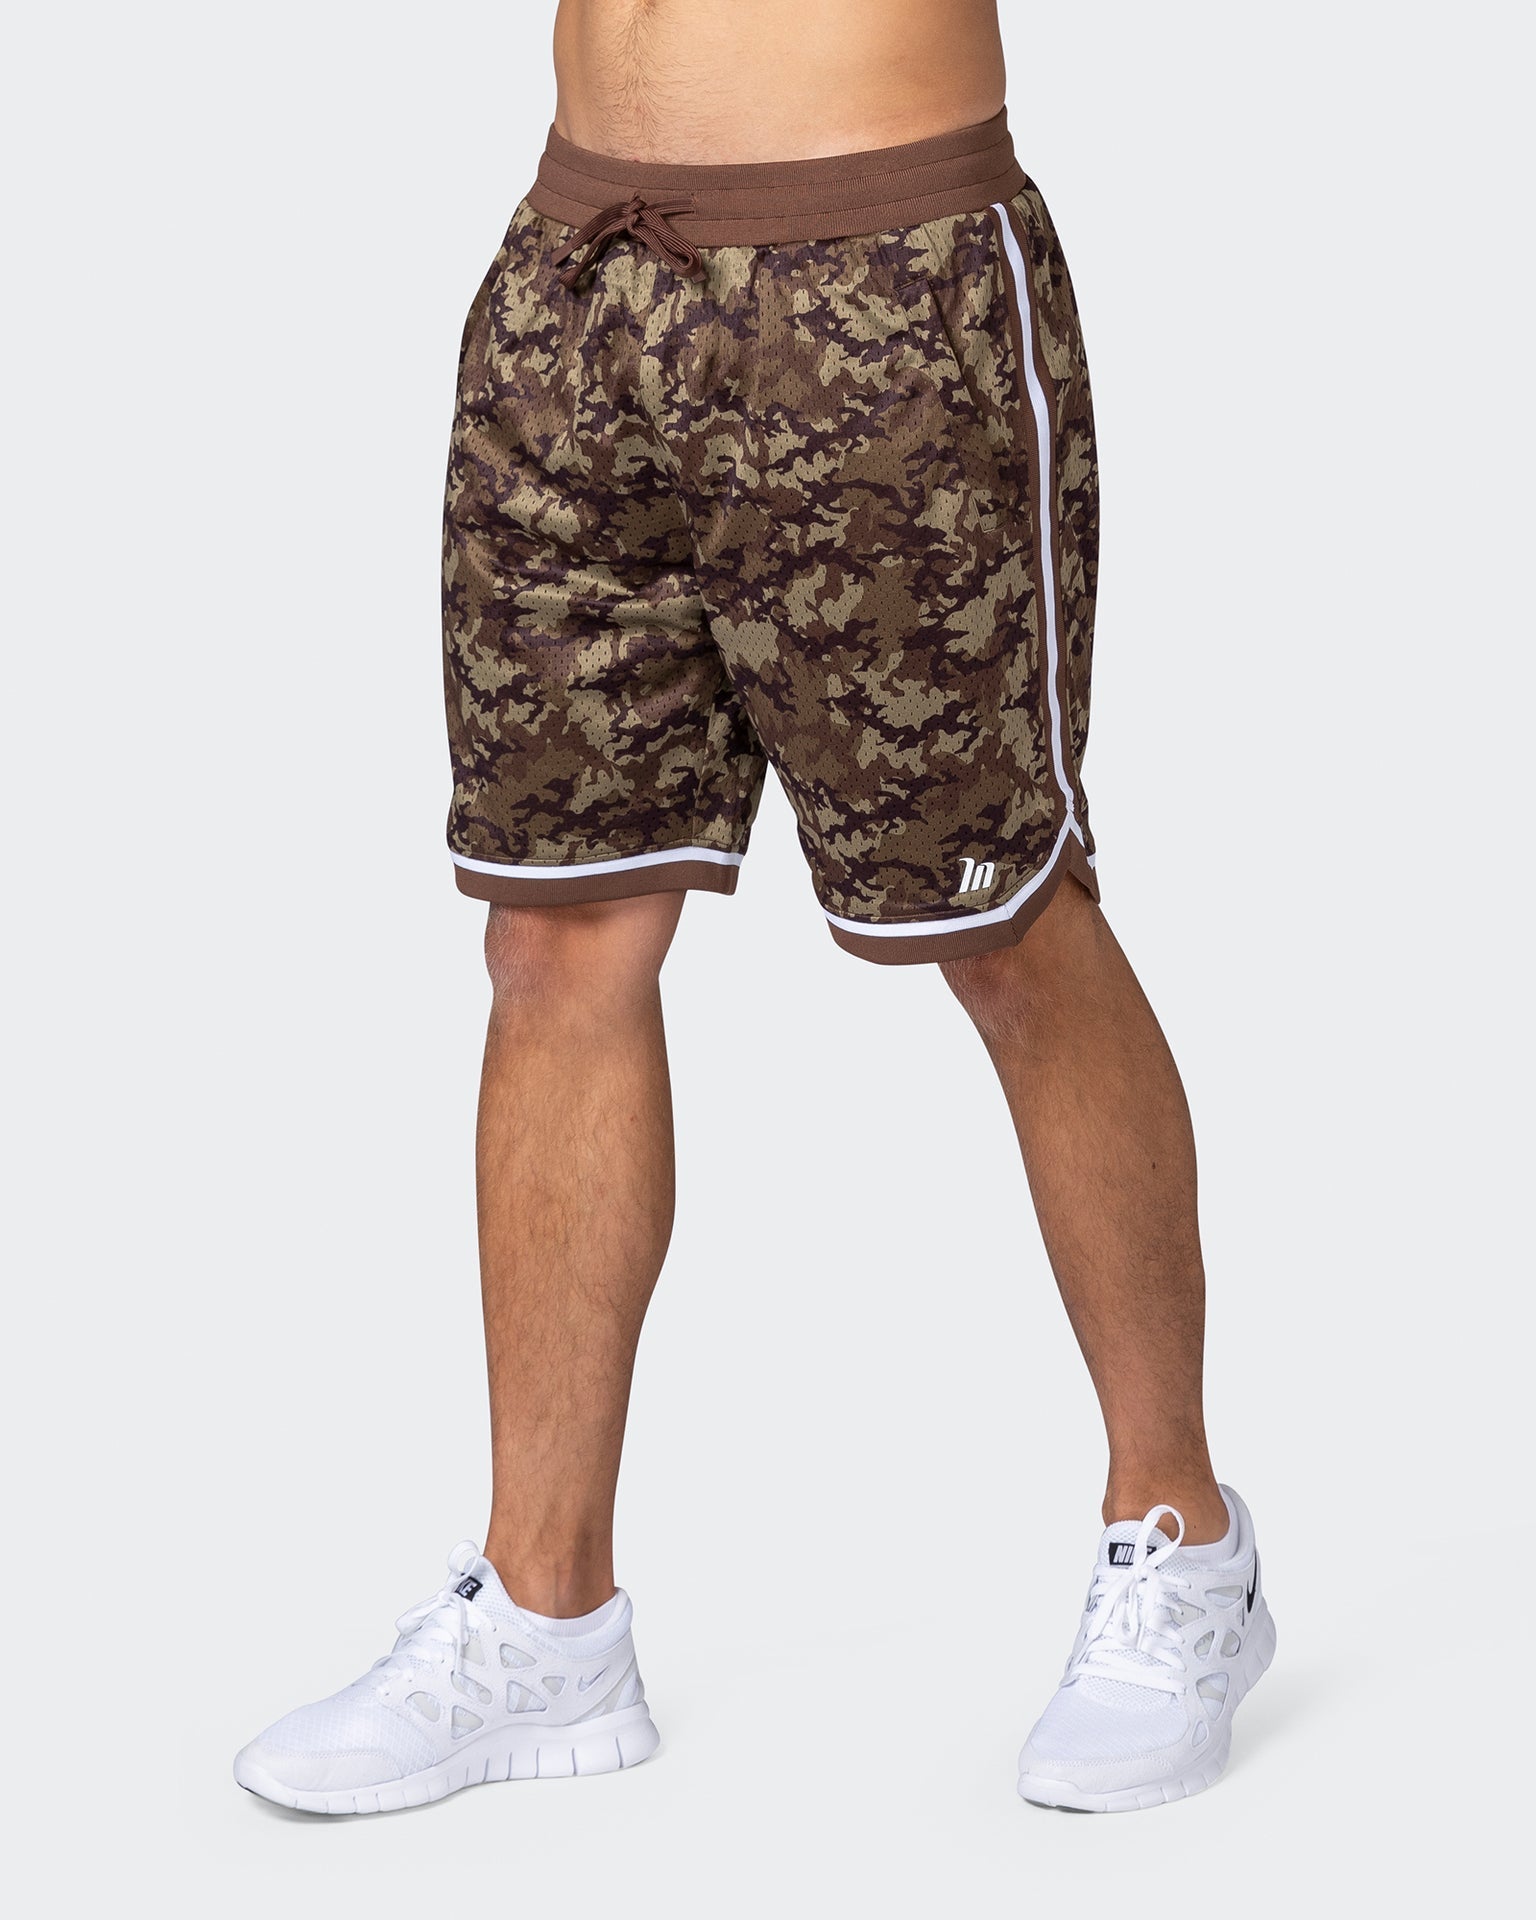 musclenation Shorts Mens 8" Basketball Shorts - Chestnut Camo Print